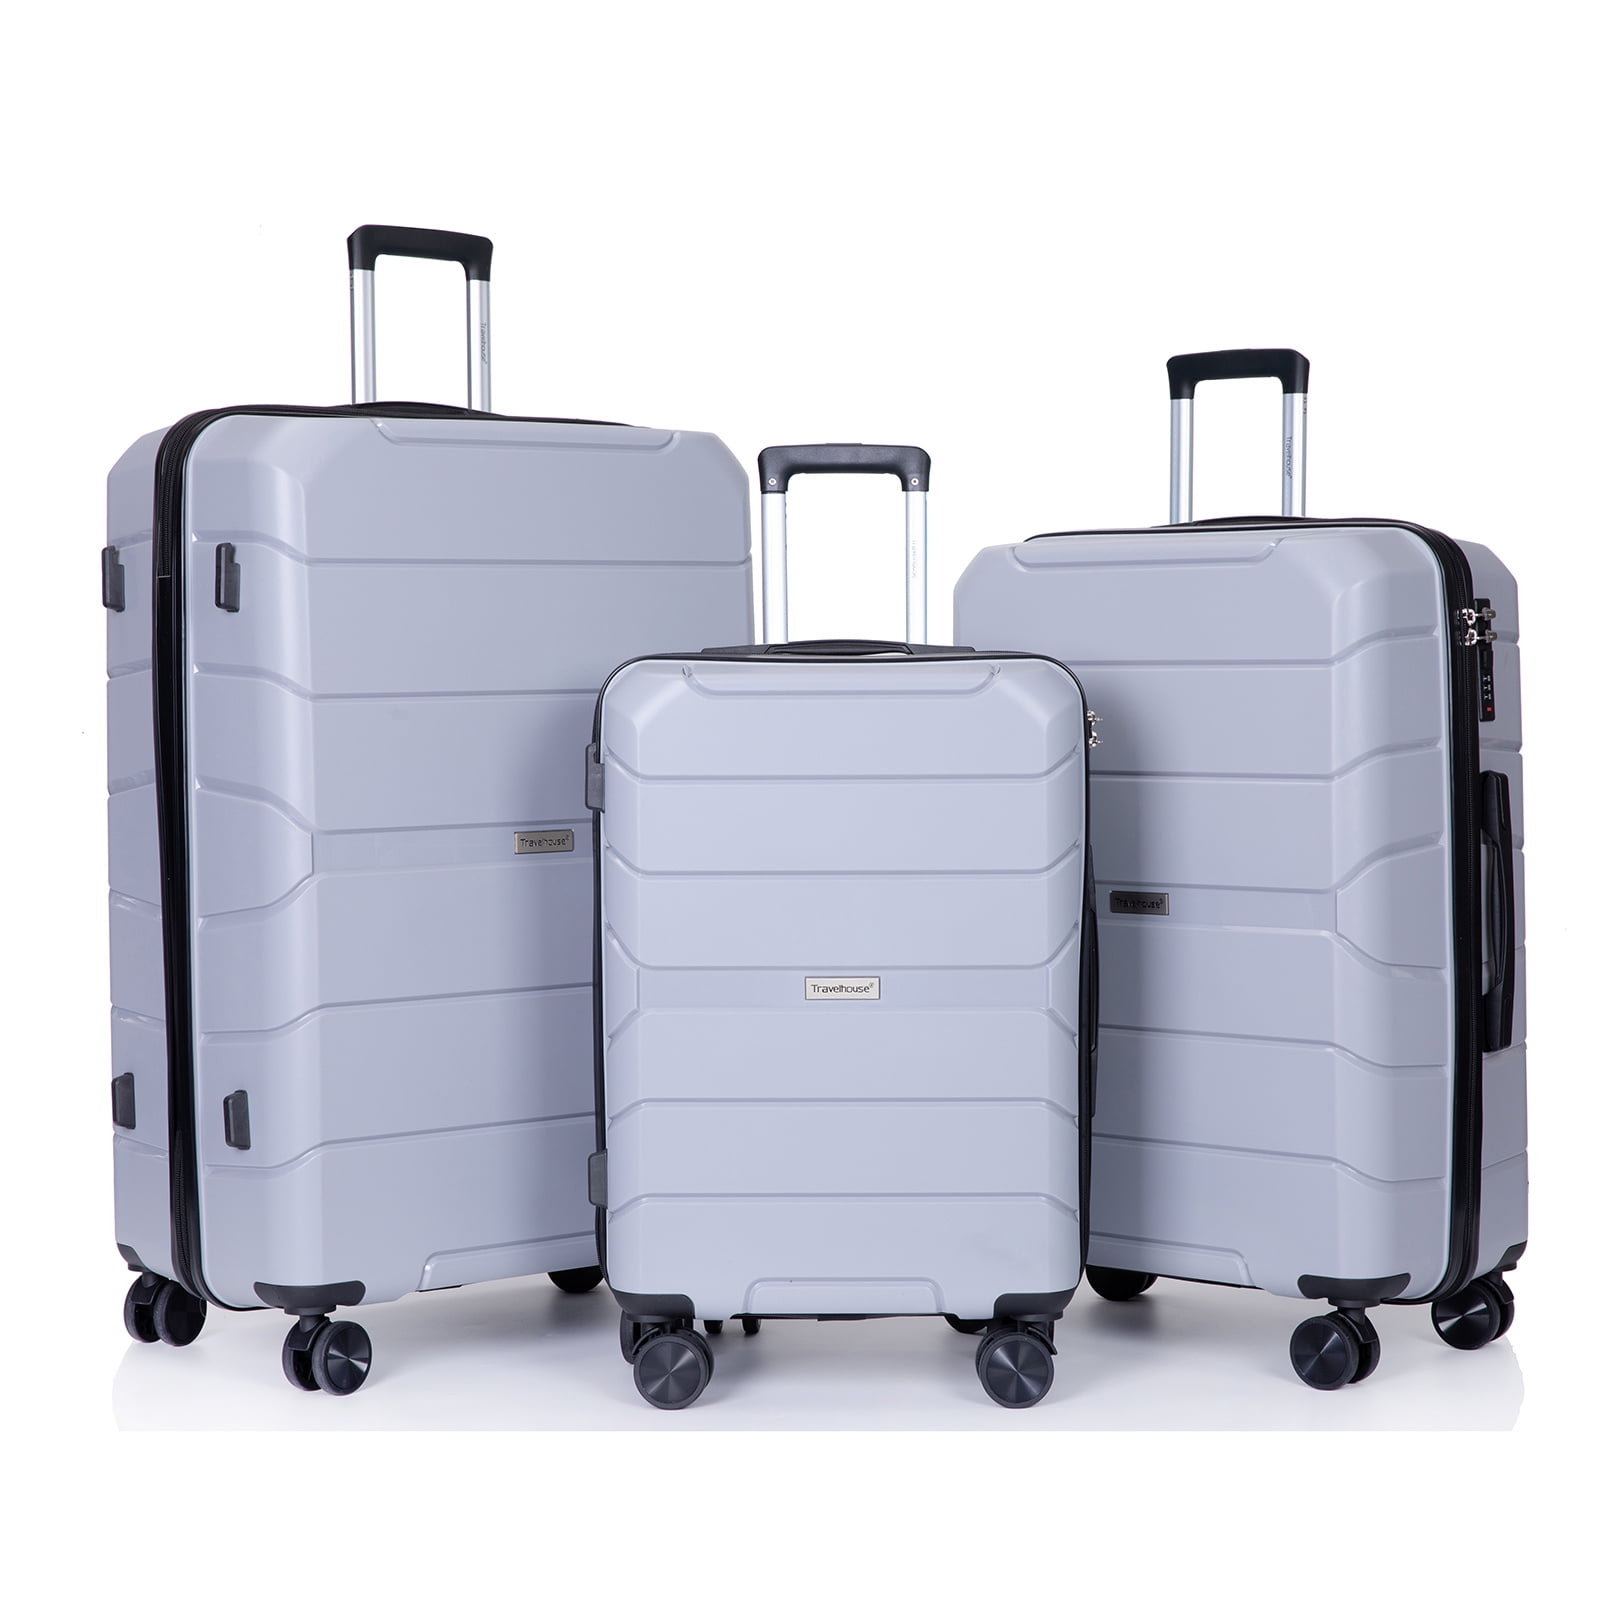 AUKFA Hardside Suitcase Spinner Wheels PP Luggage Set Lightweight